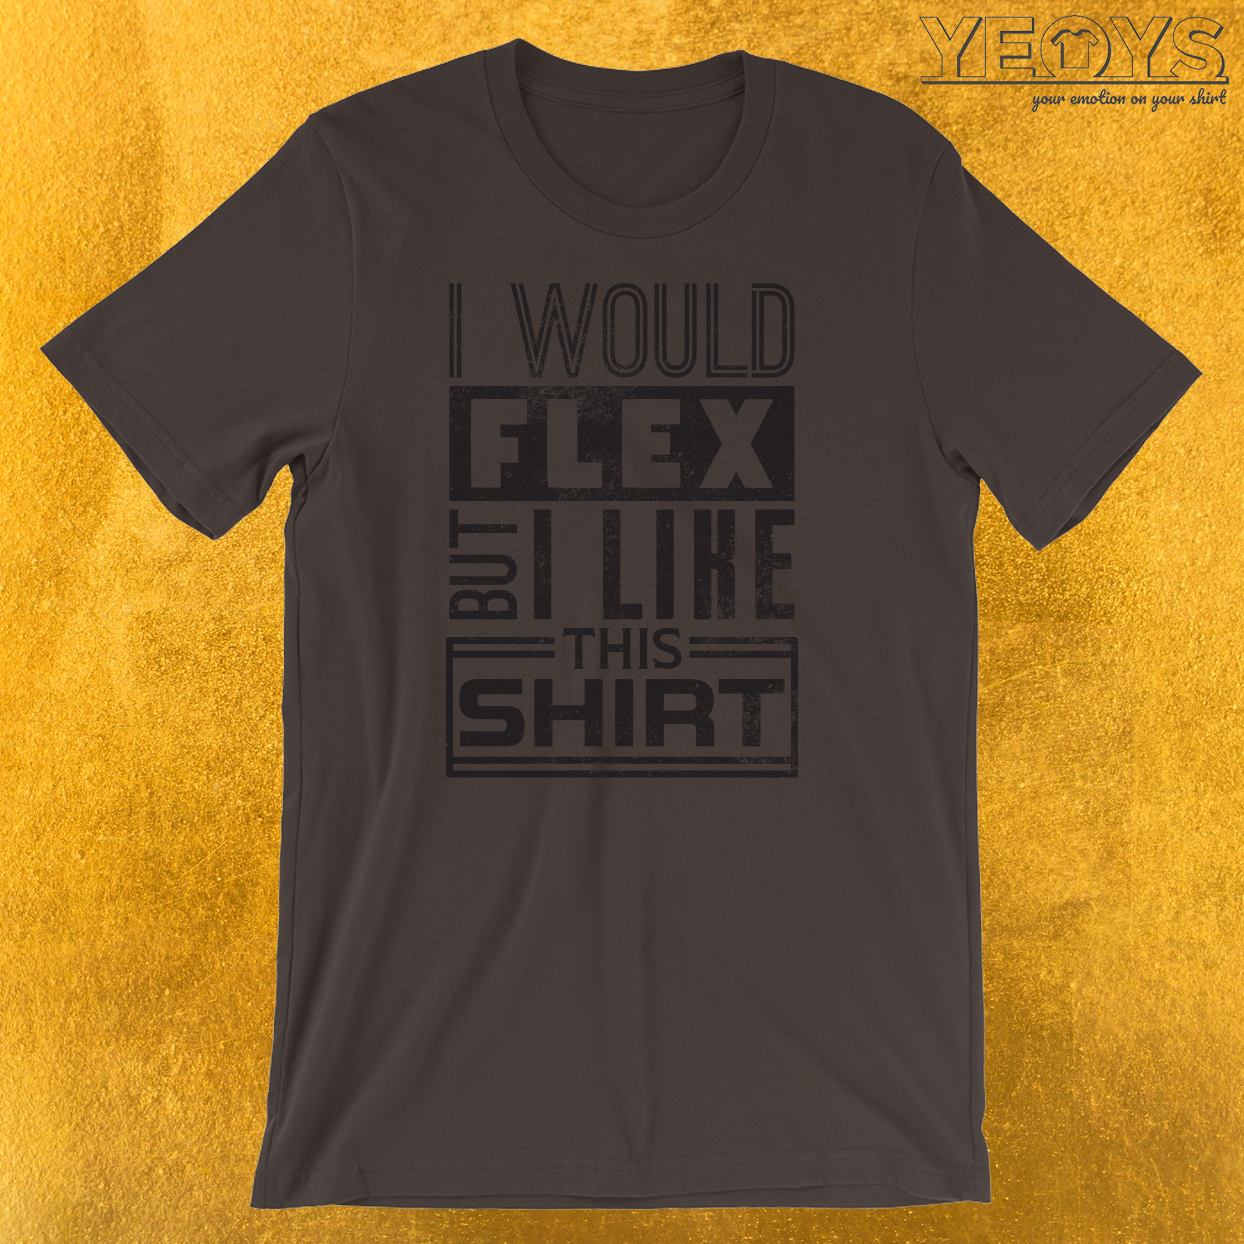 I Would Flex But I Like This Shirt T-Shirt